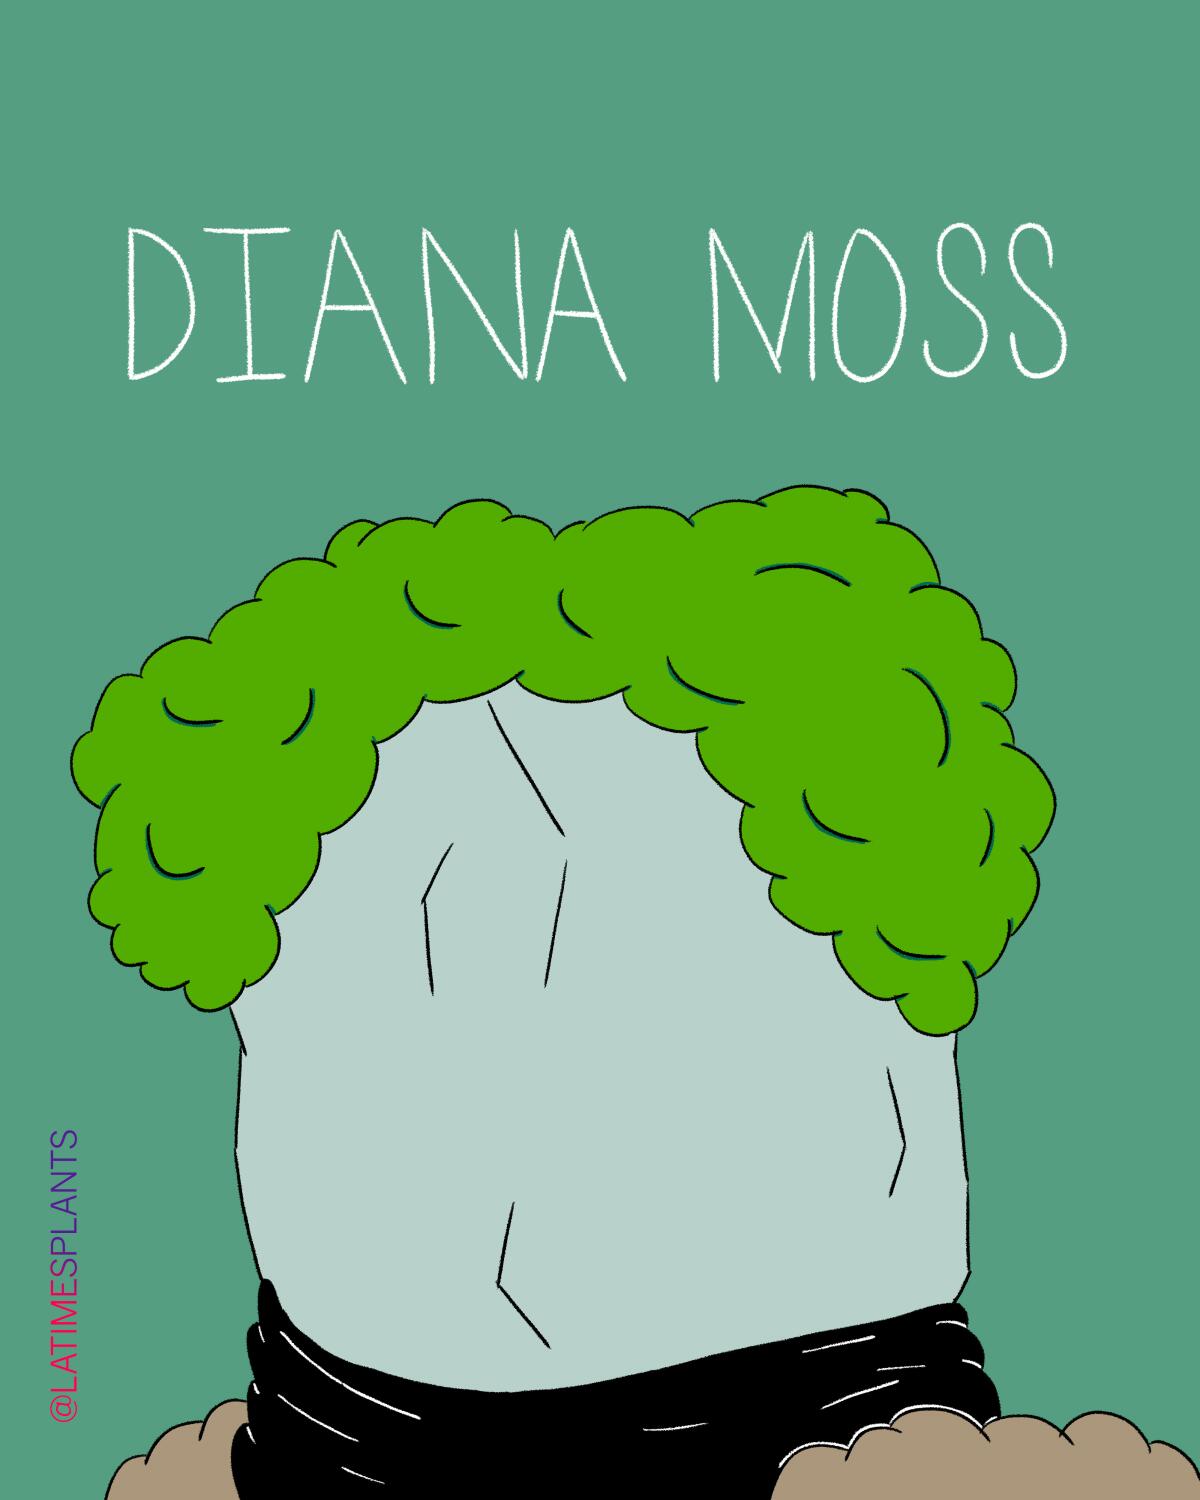 Diana Moss